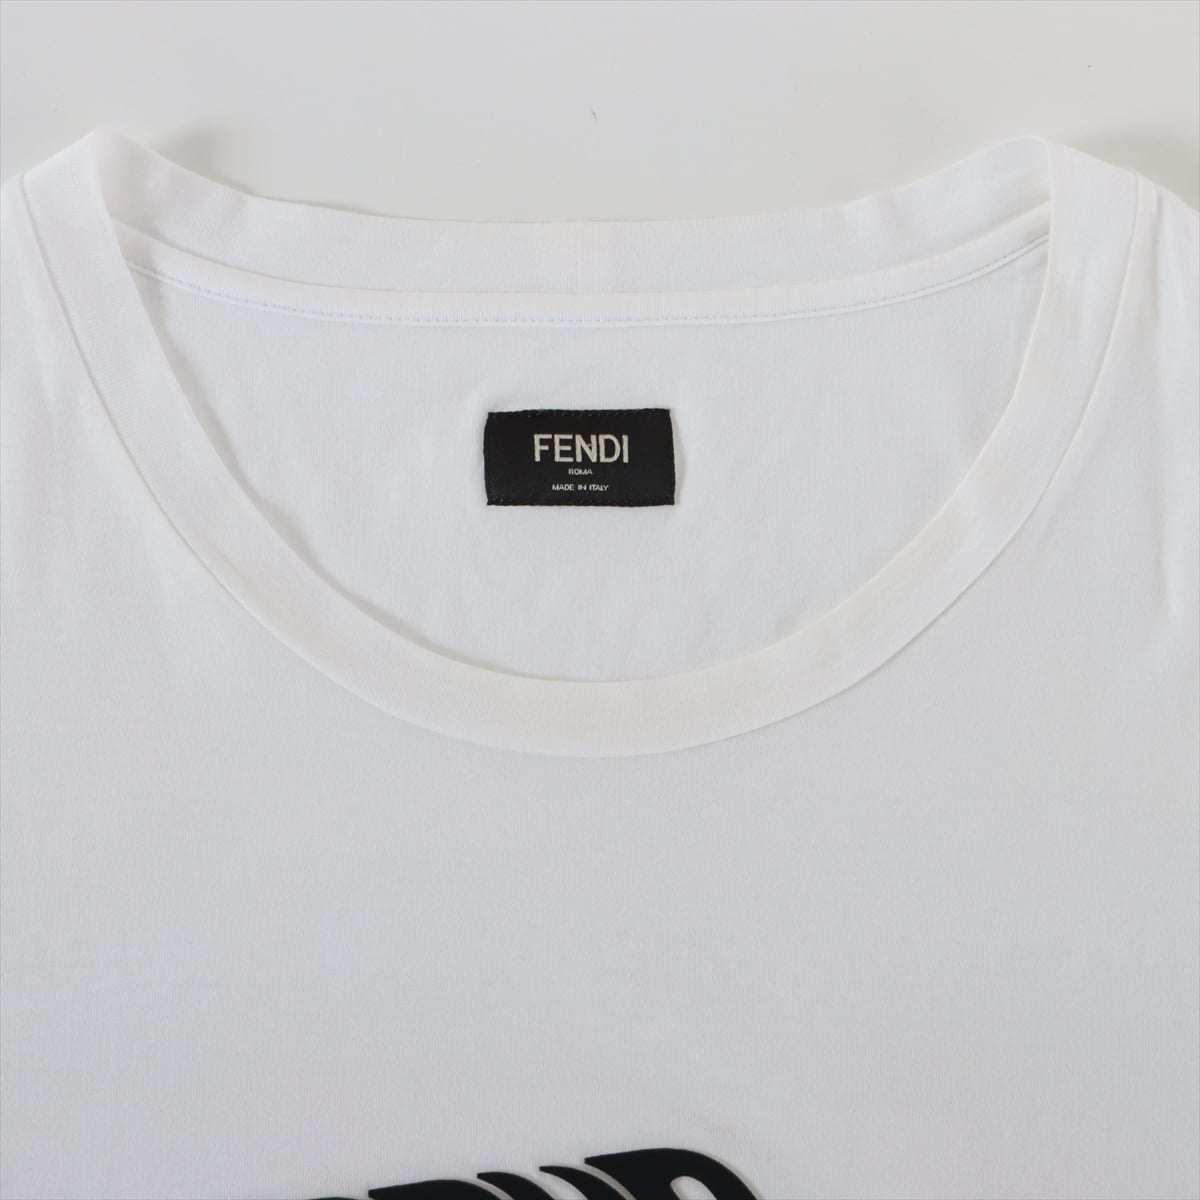 Tシャツ/カットソー(半袖/袖なし)FENDI ROMA AMOR コットンTシャツ